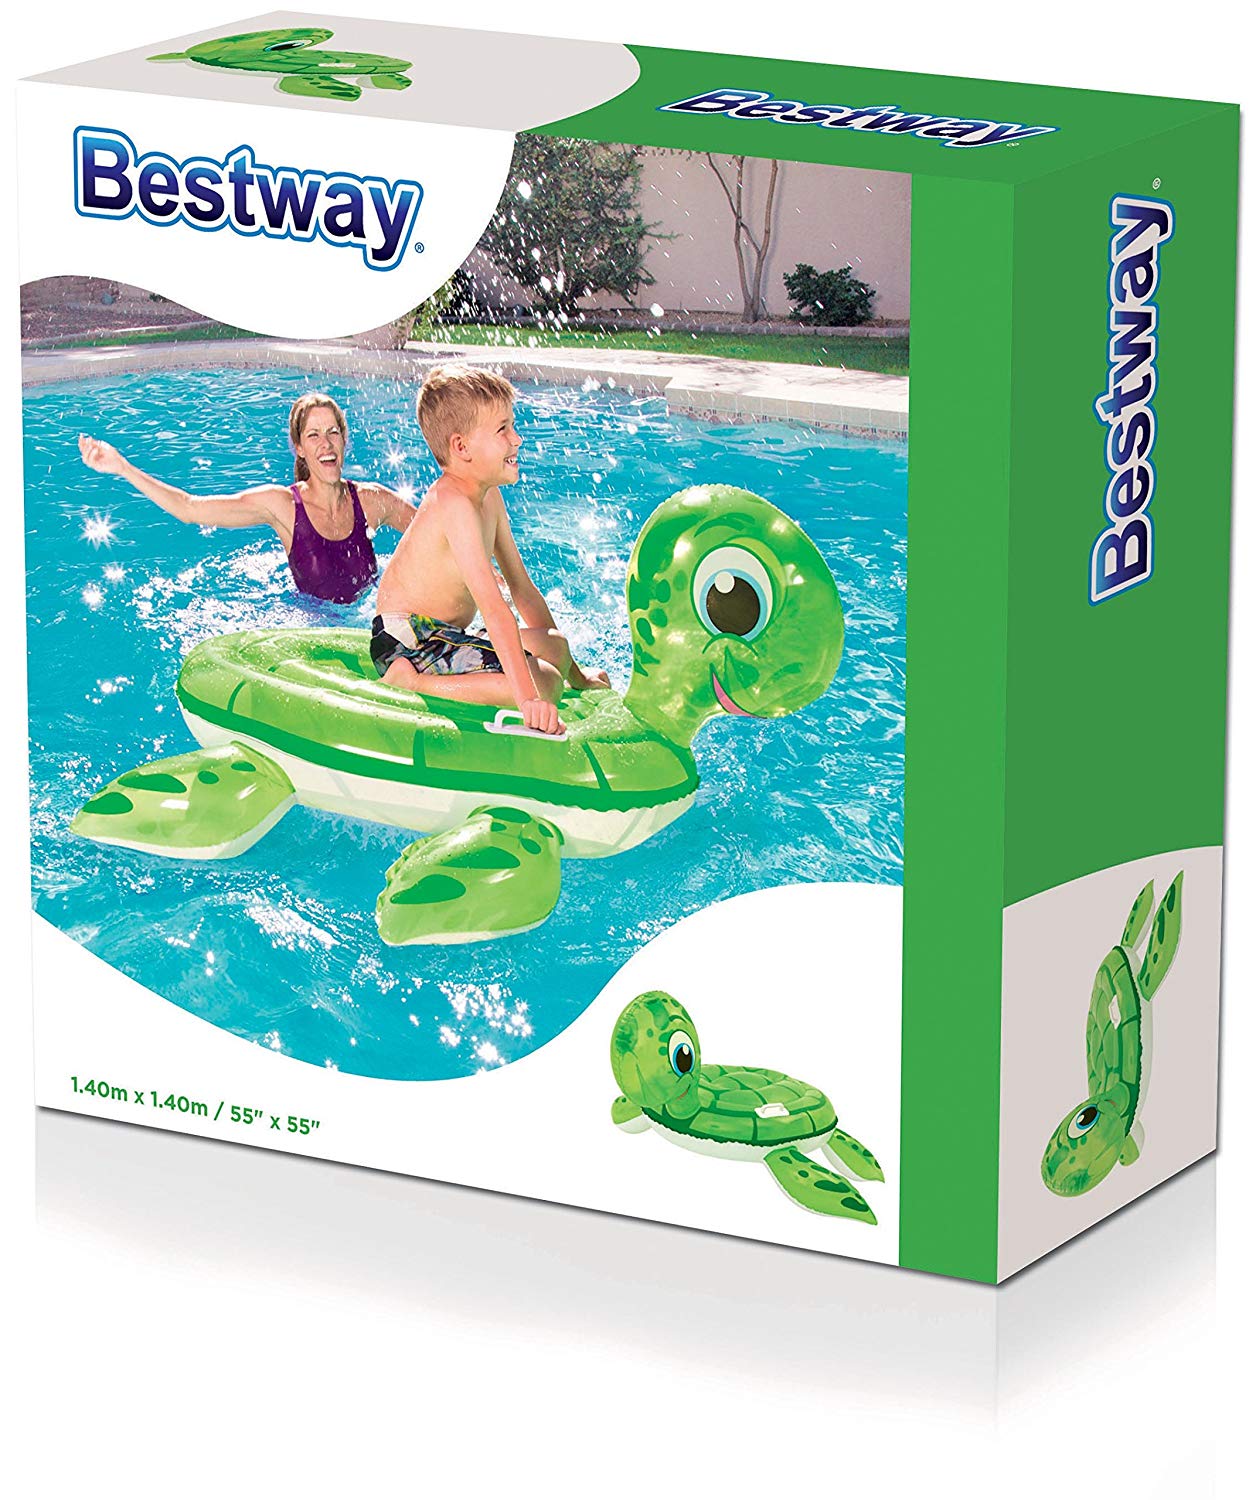 Bestway - Turtle Ride-On (55" x 55"/1.40m x 1.40m)